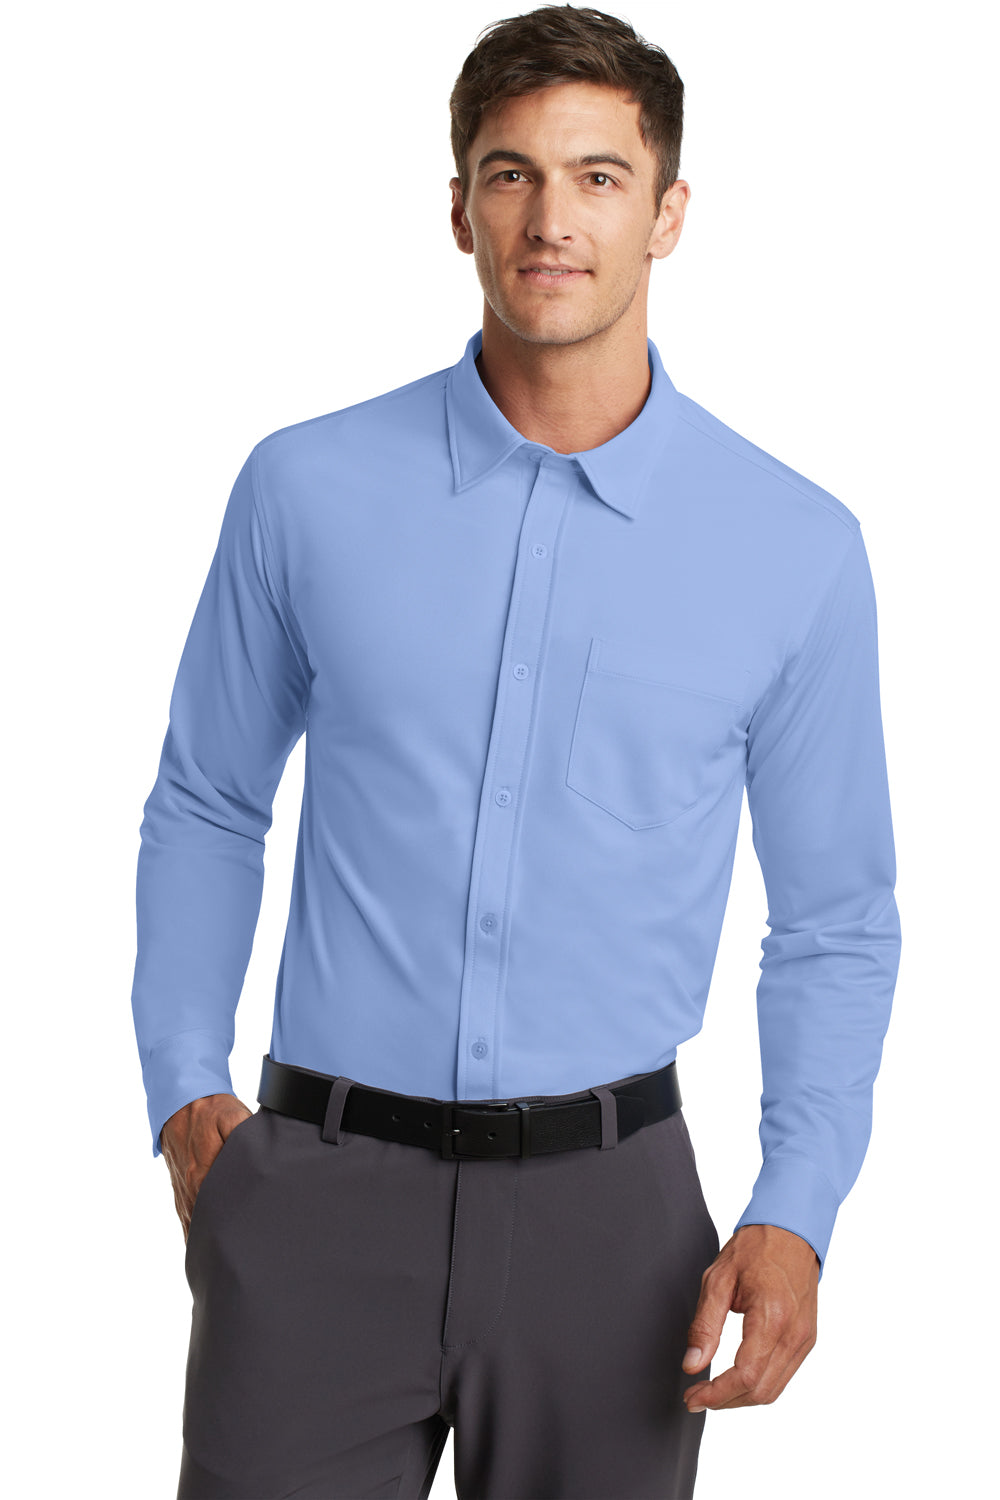 Port Authority K570 Mens Dimension Moisture Wicking Long Sleeve Button Down Shirt w/ Pocket Dress Shirt Blue Front